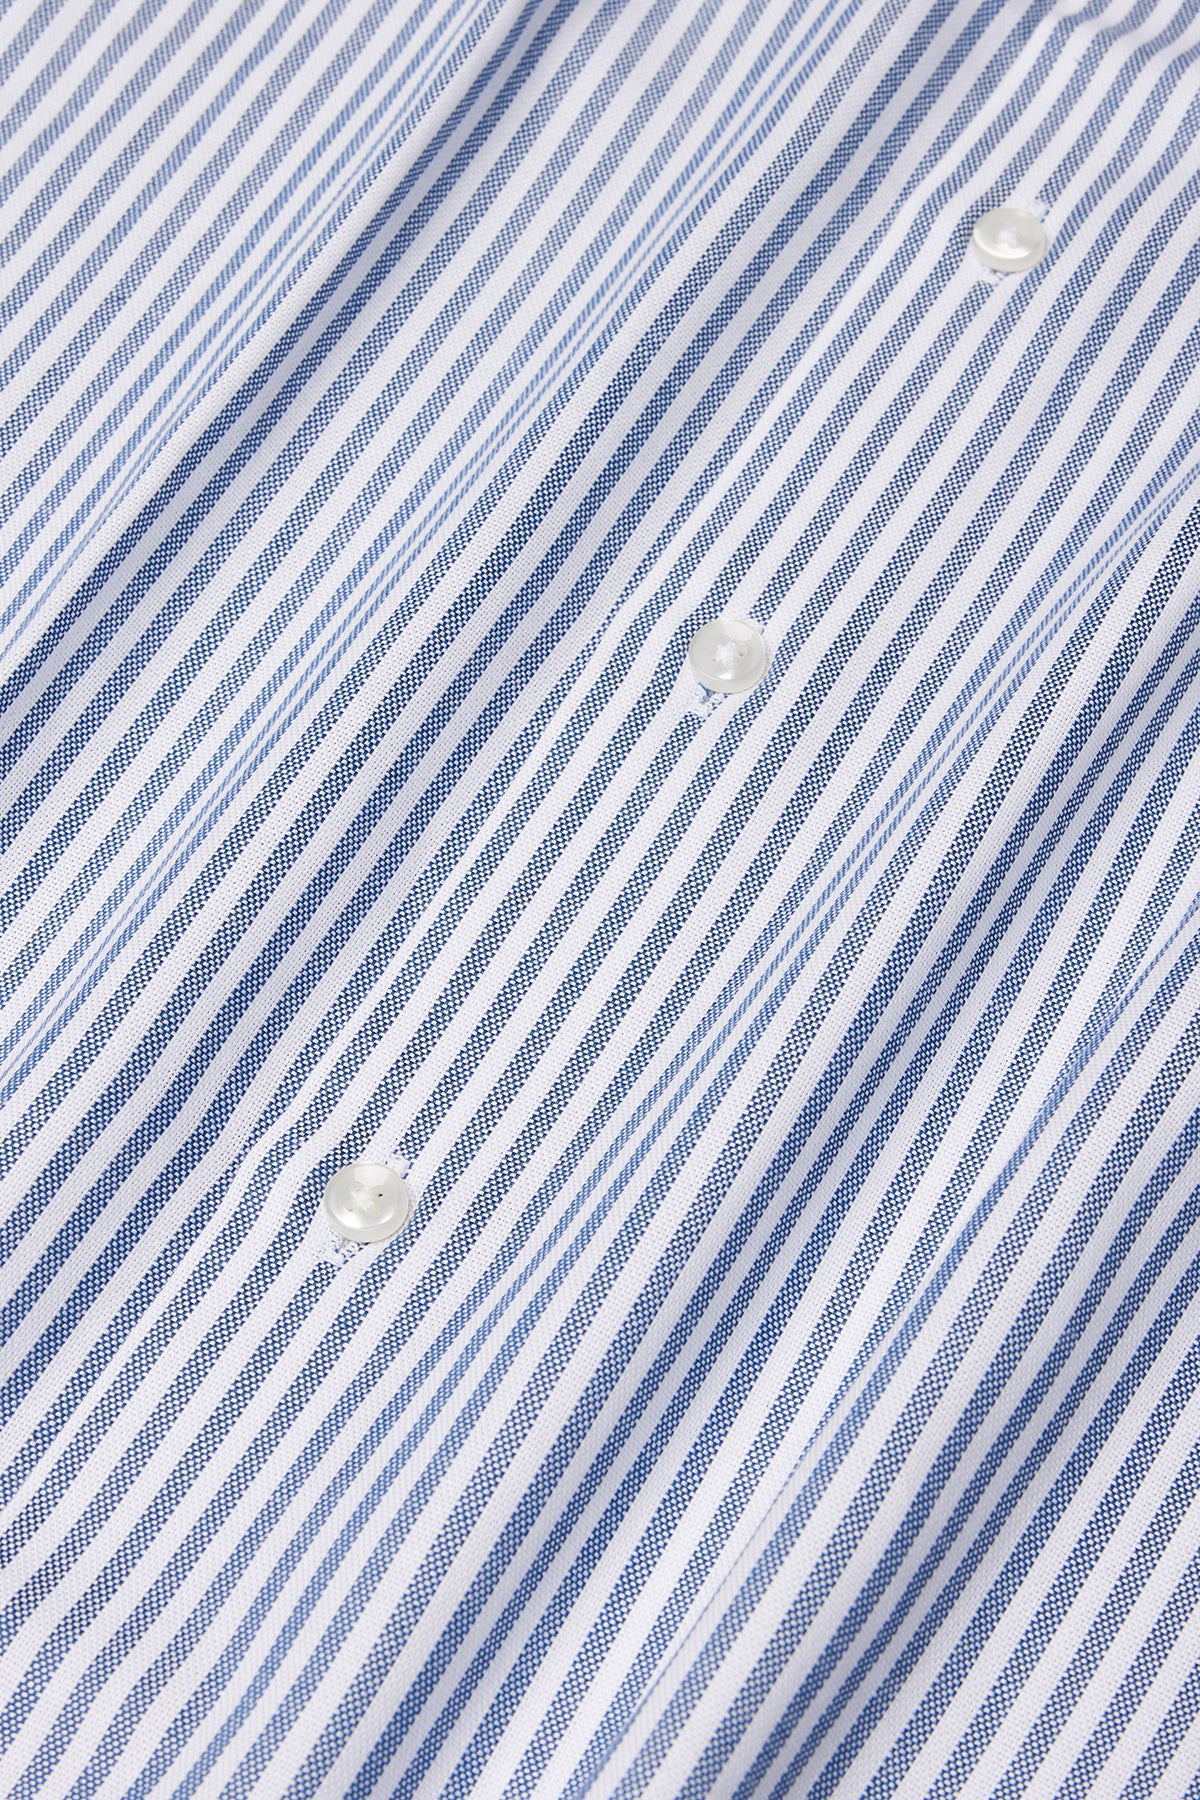 Blue Striped White Collar Shirt